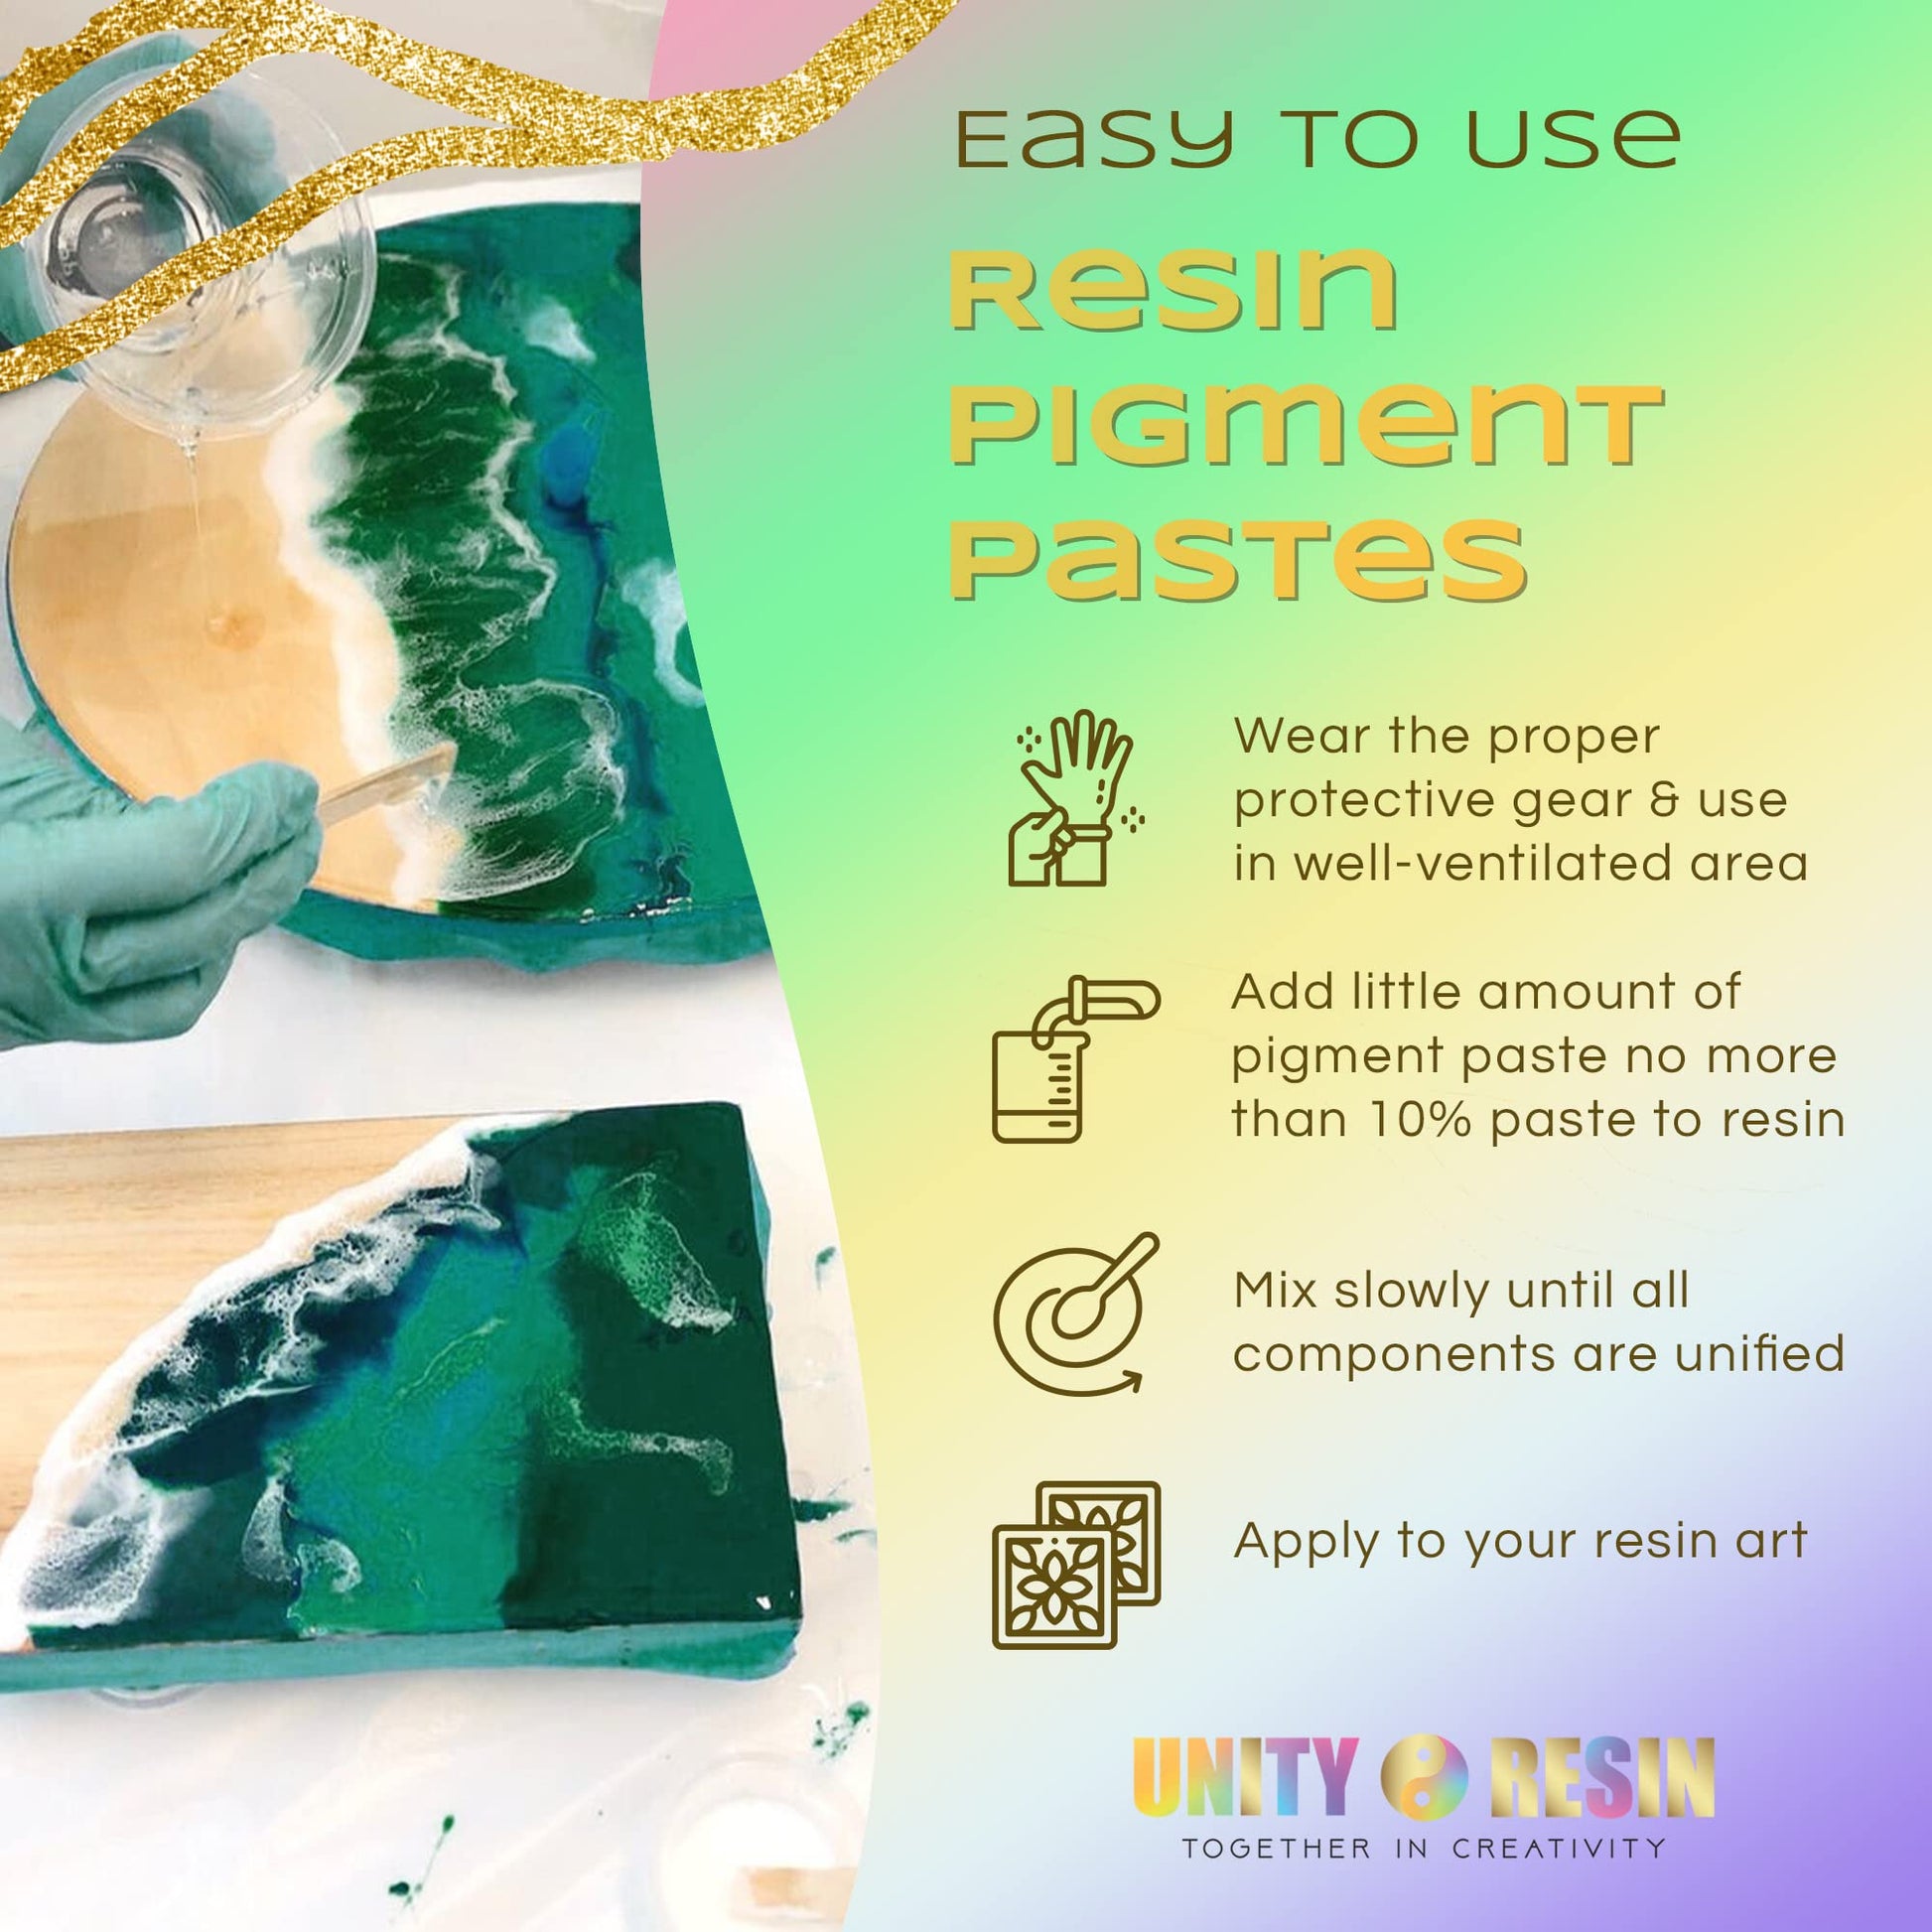 Ultra-Luxe Epoxy Resin Pigment Paste- STONE GRAY (50G)